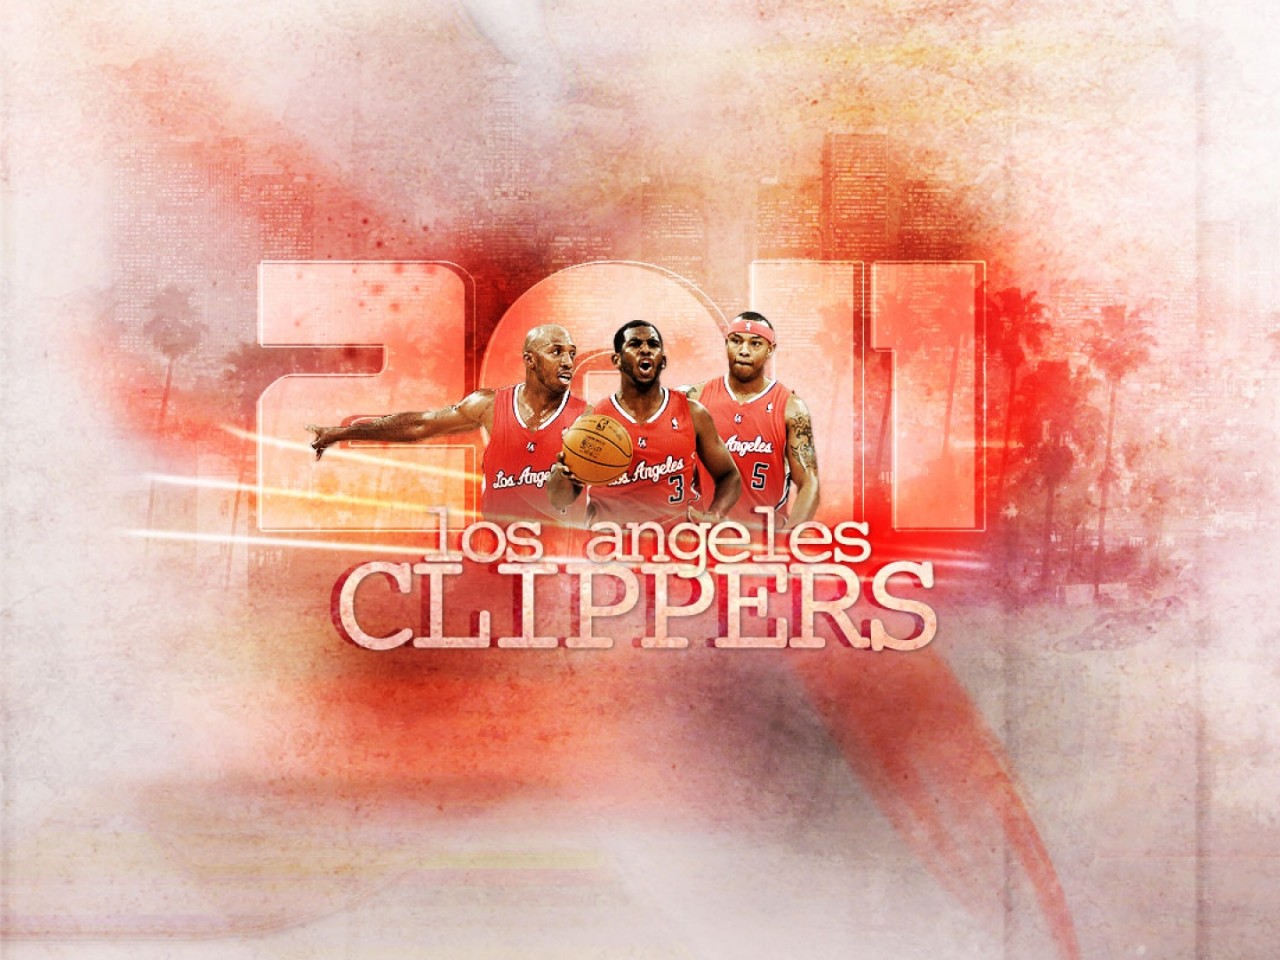 La Clippers Logo Editorial Illustrative on White Background Editorial Image   Illustration of logos illustrative 209798255